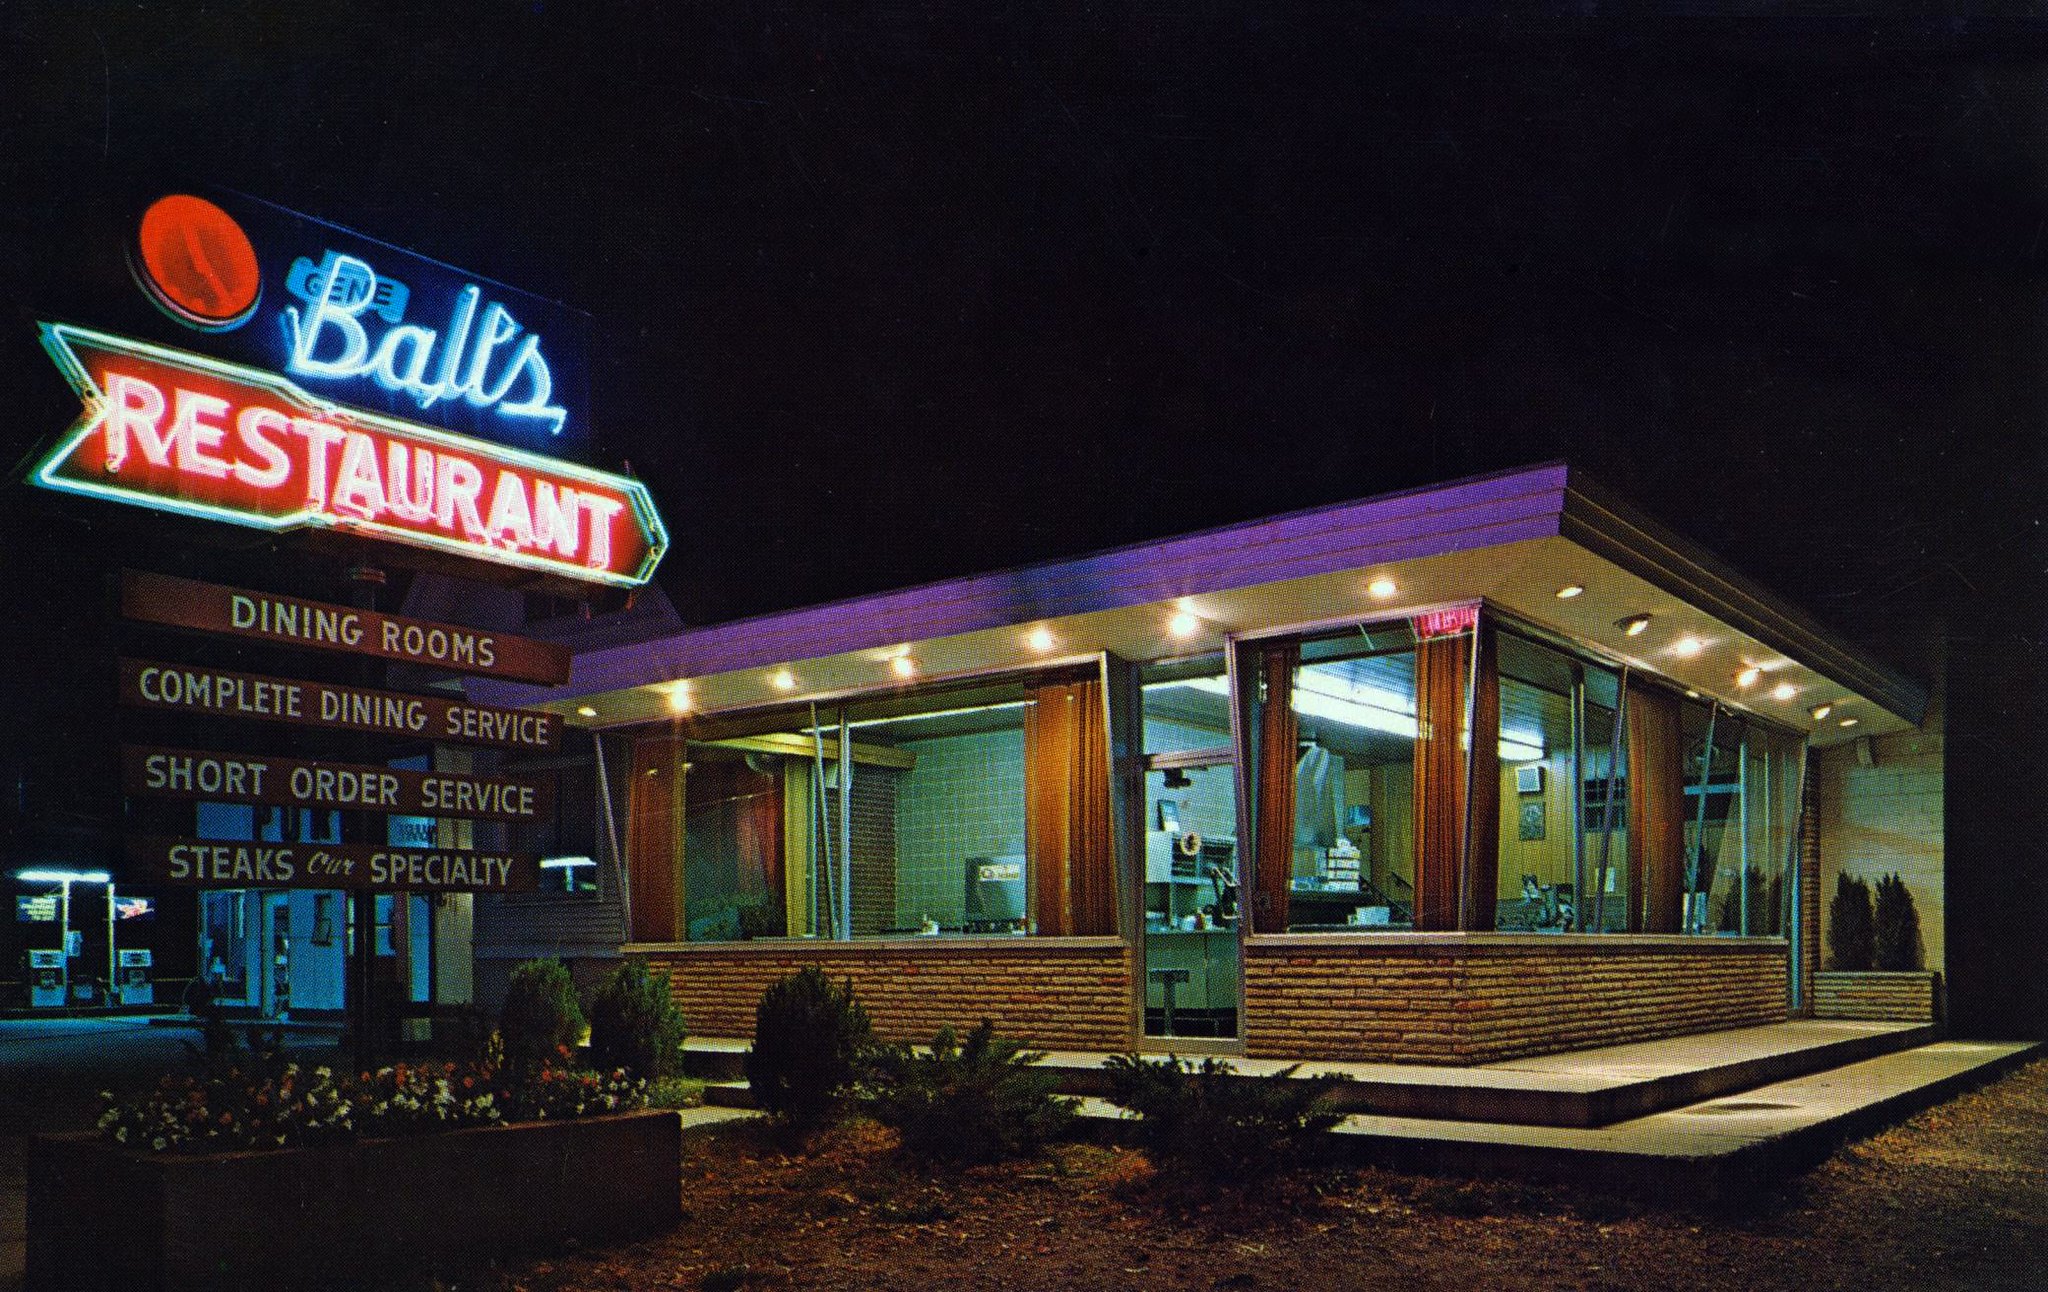 Gene Ball's Restaurant - Point Pleasant, West Virginia U.S.A. - date unknown